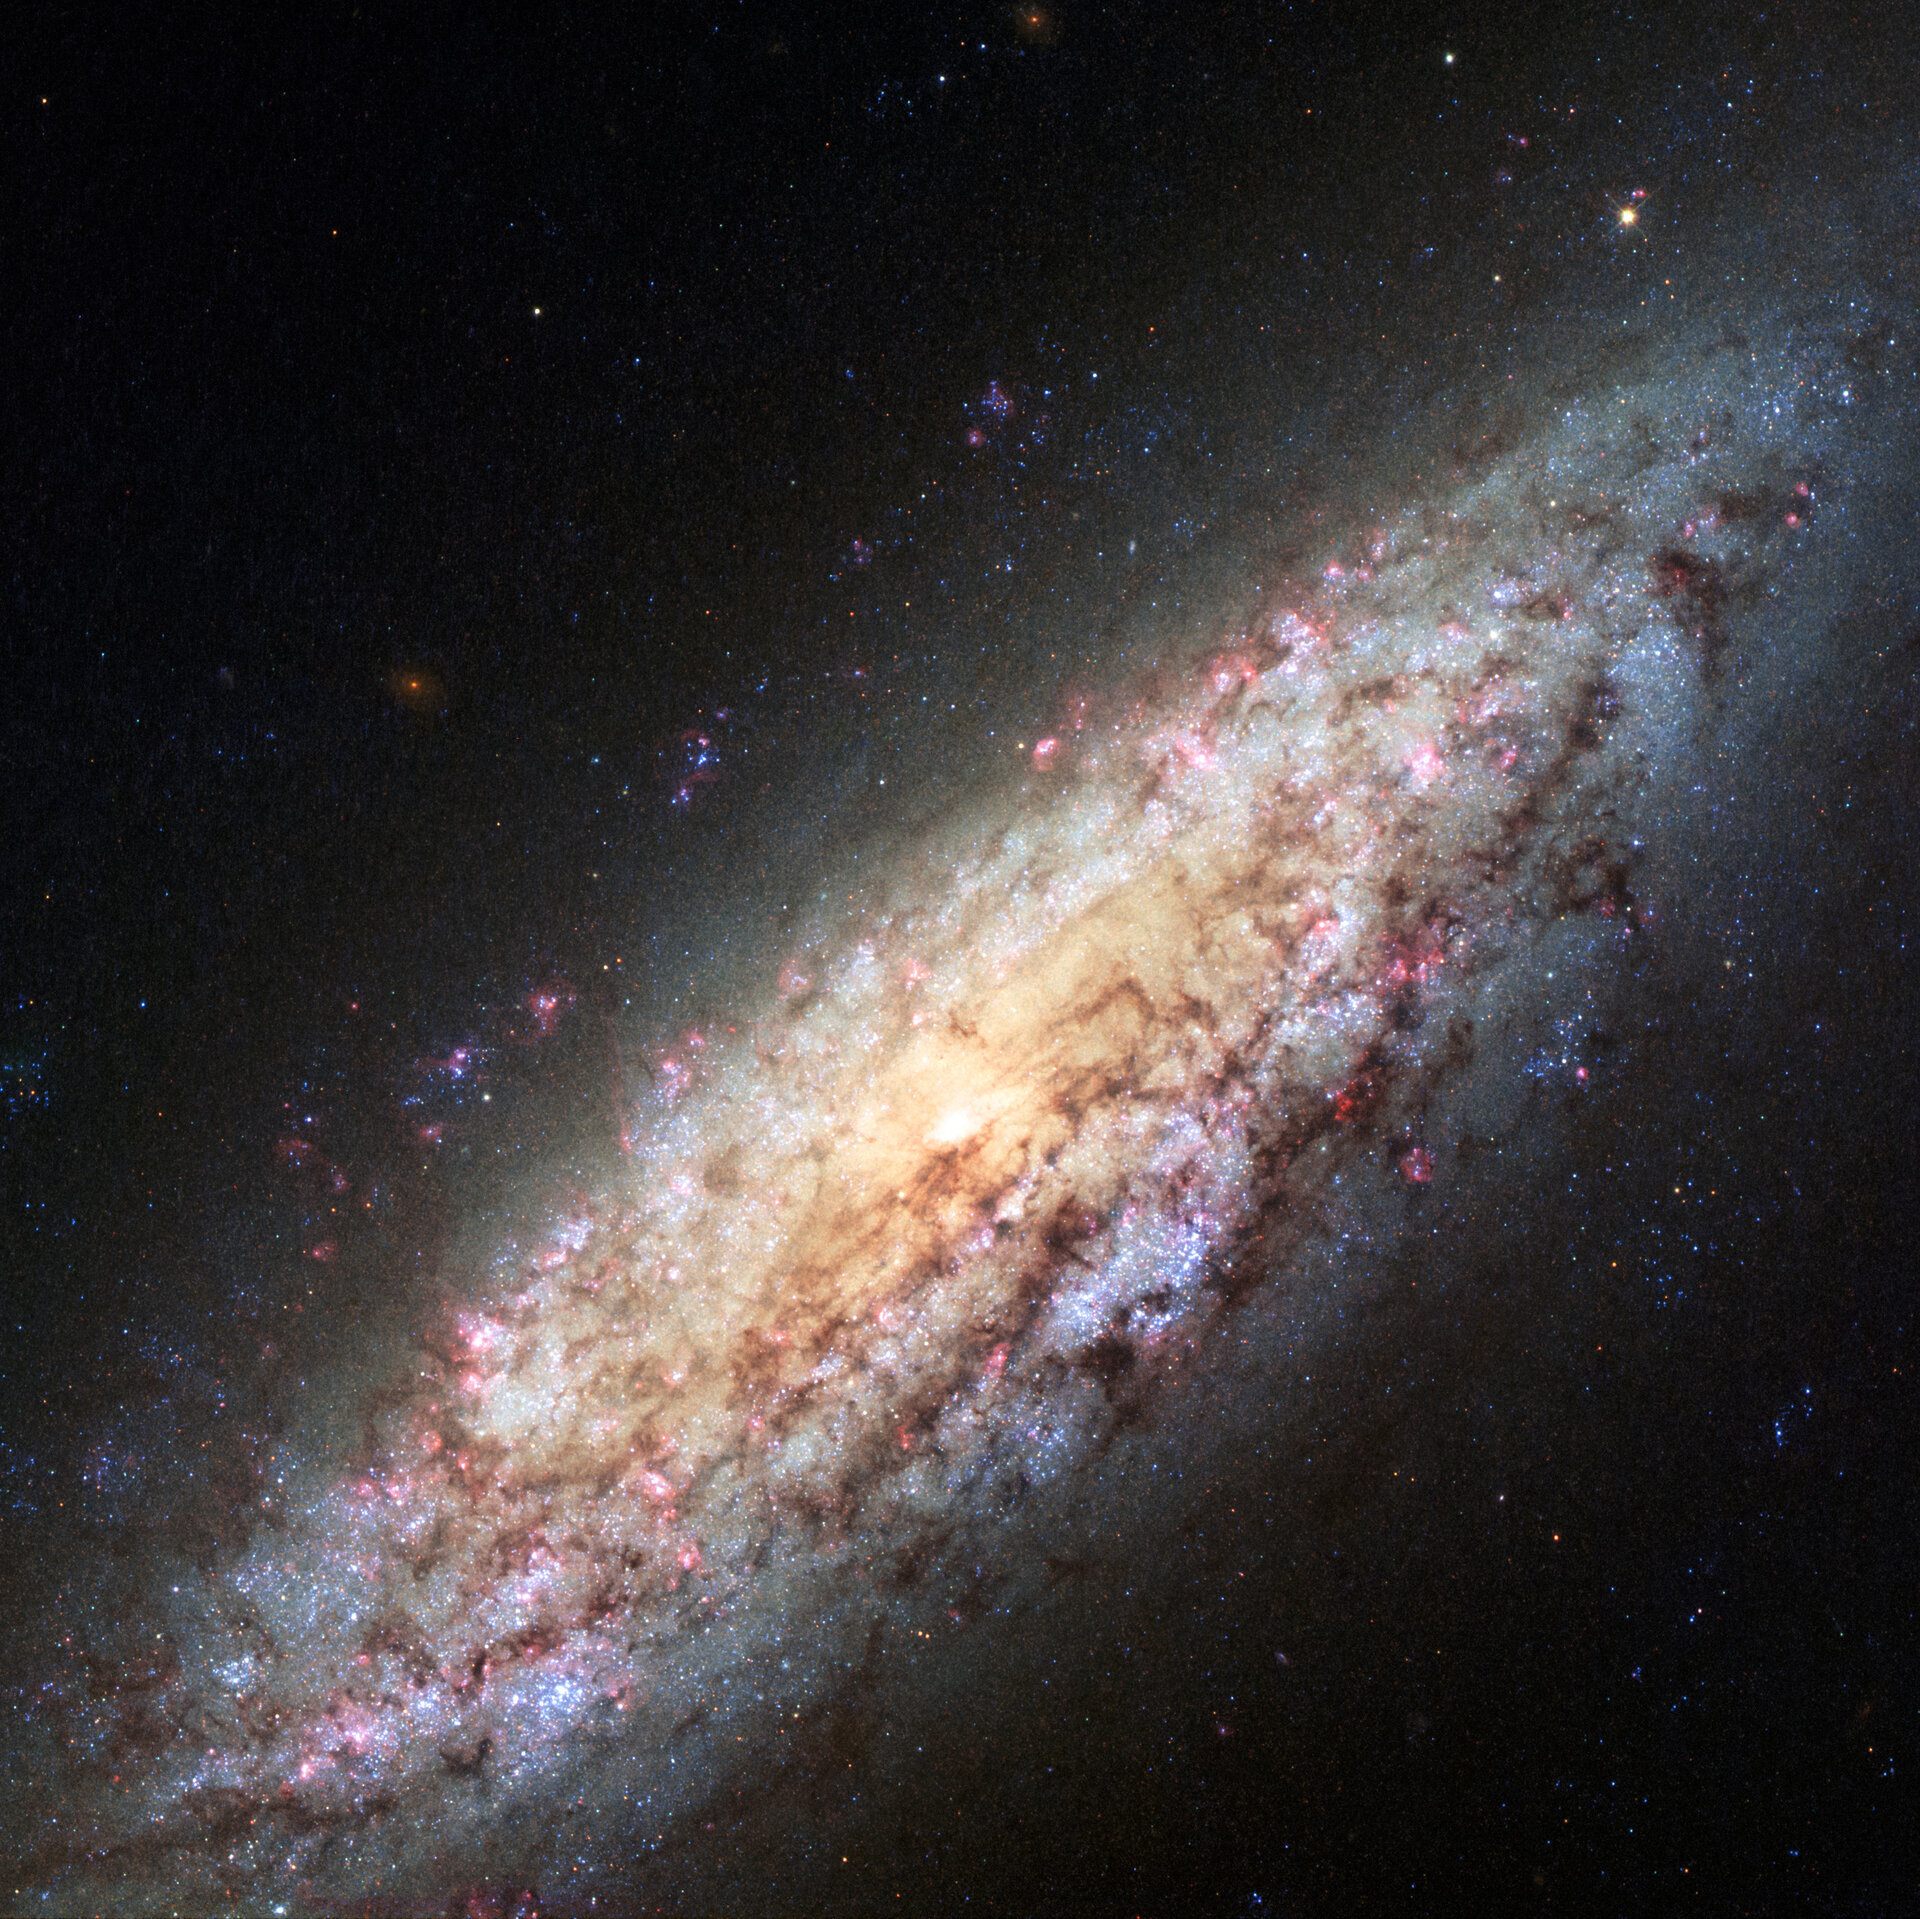 Galaxy NGC 6503